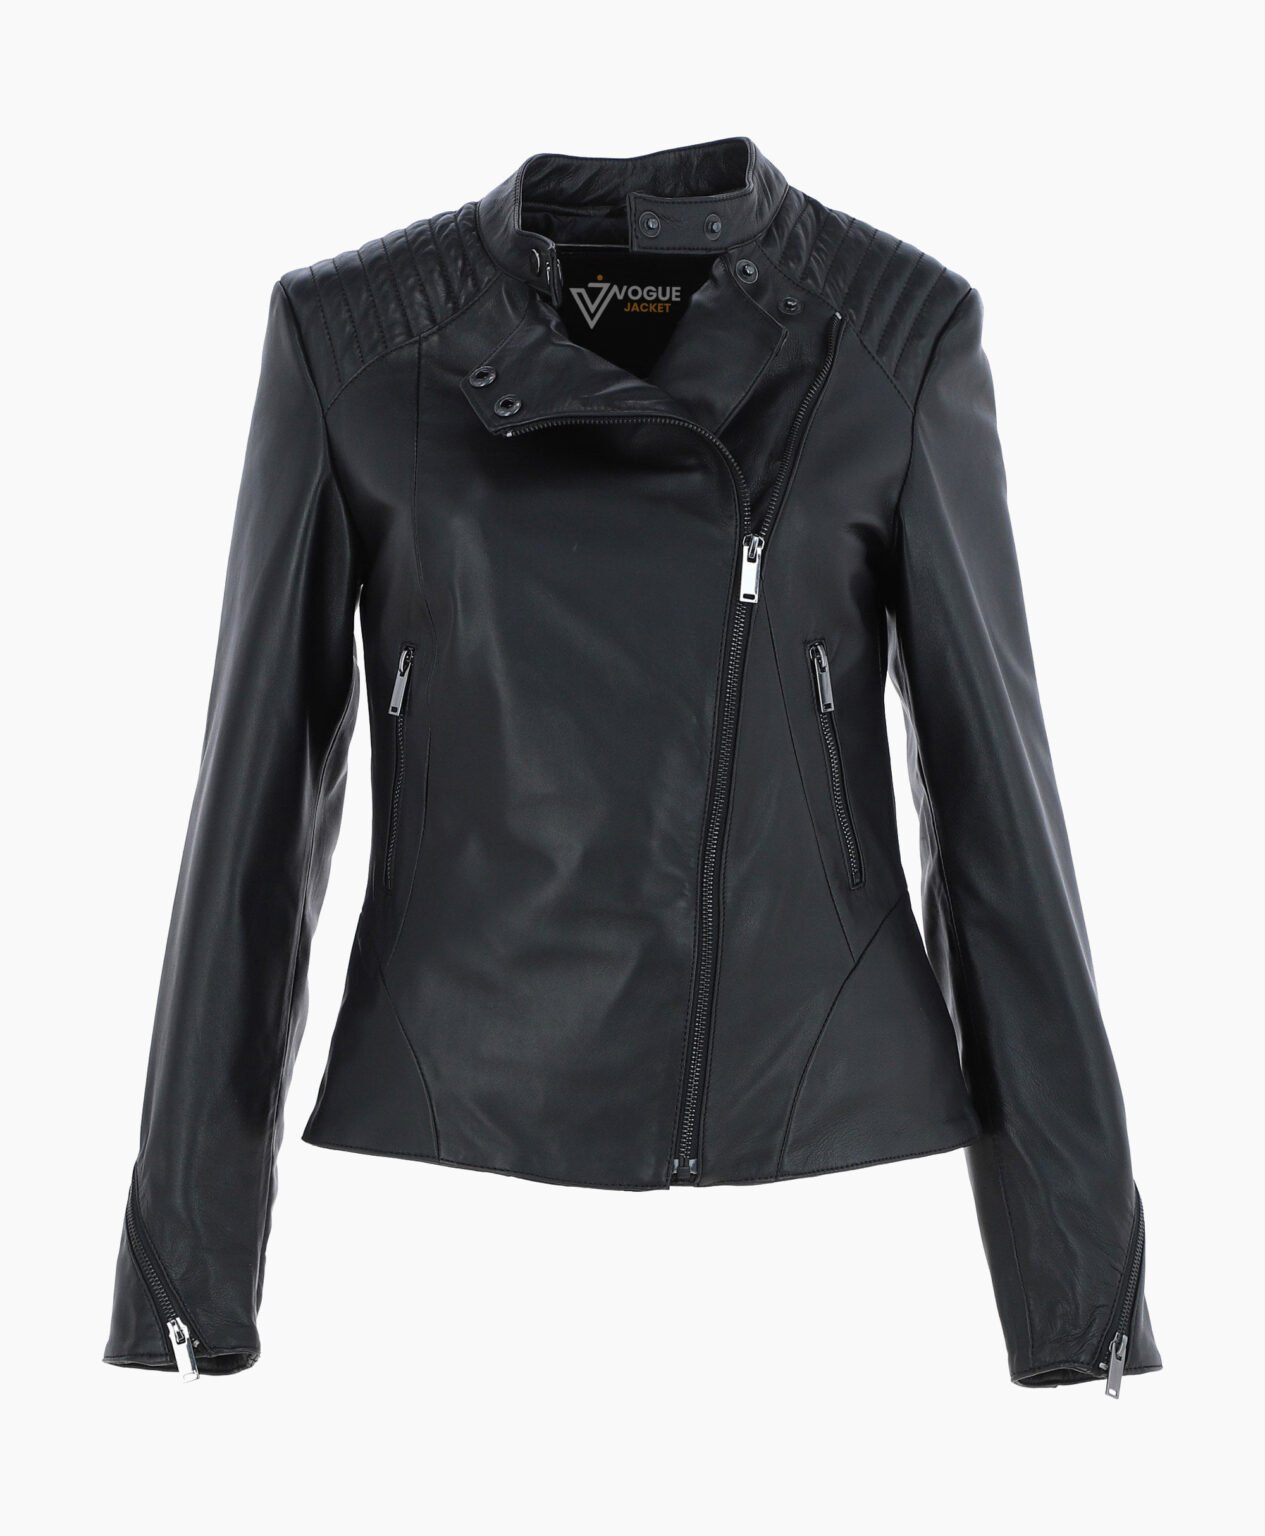 vogue-jacket-leather-biker-jacket-black-mundelein-image200